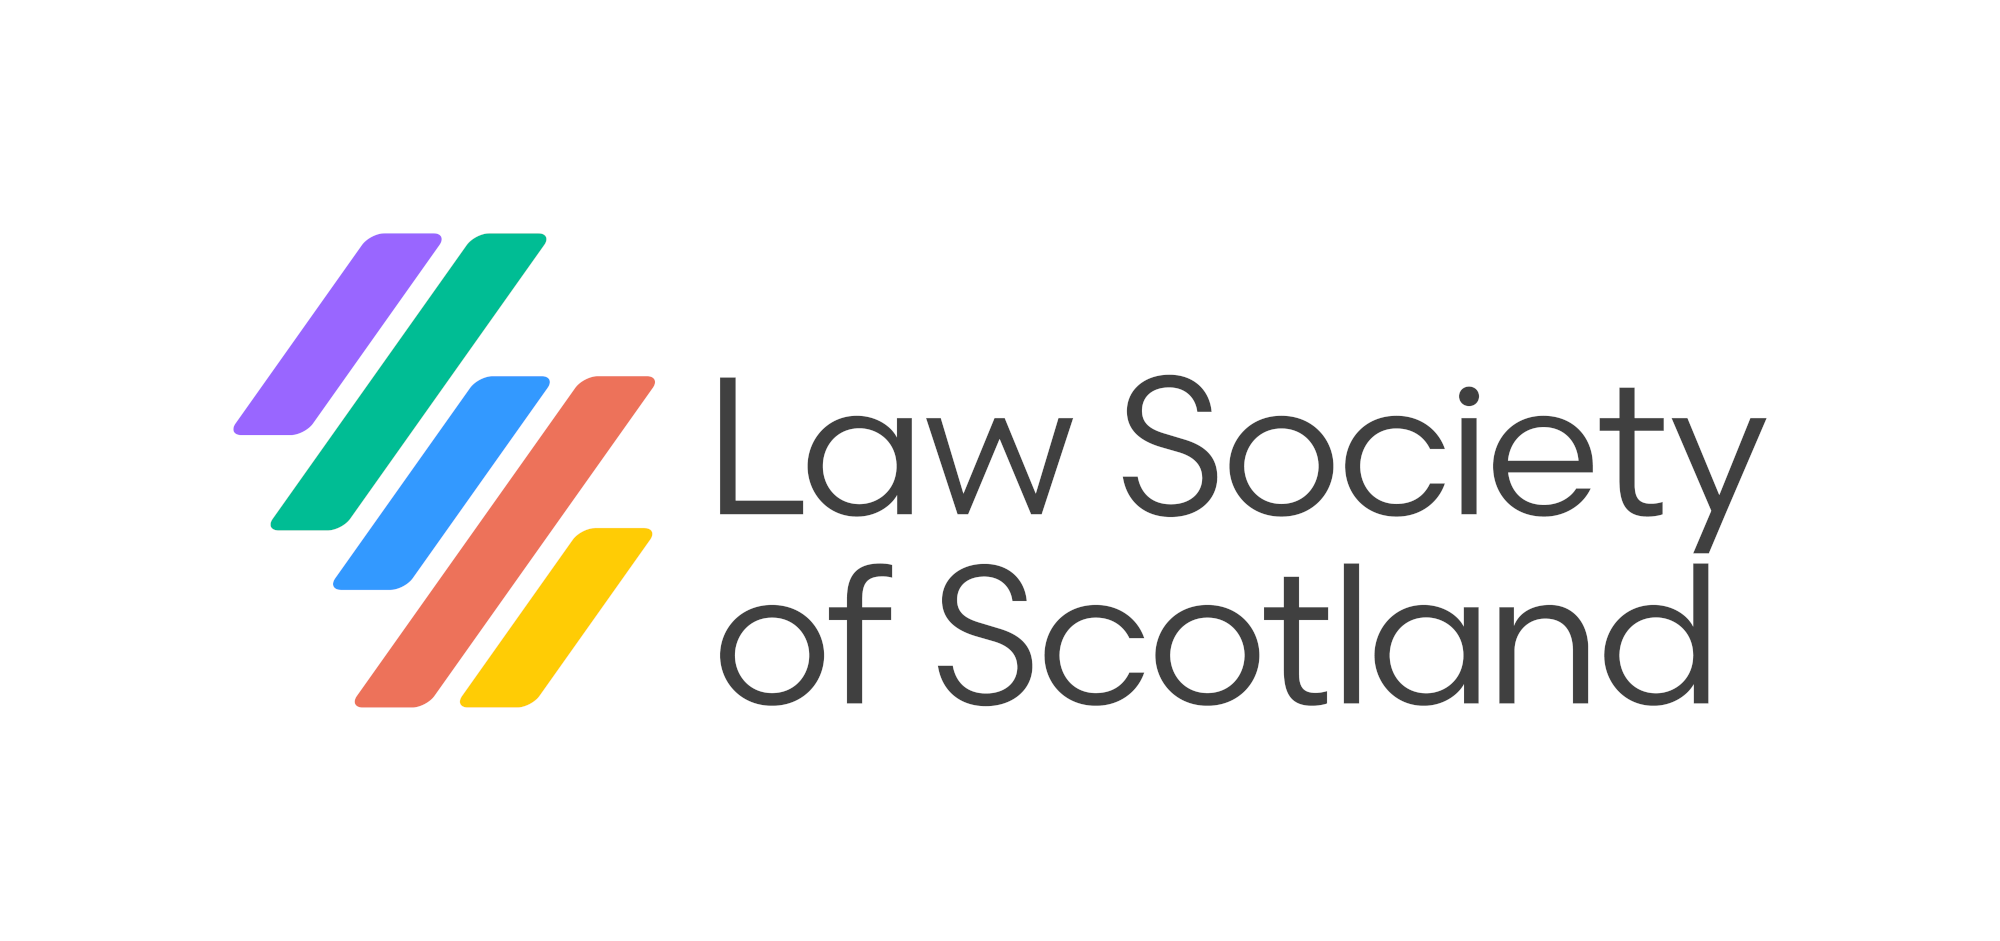 Law Society of Scotland unveils new logo